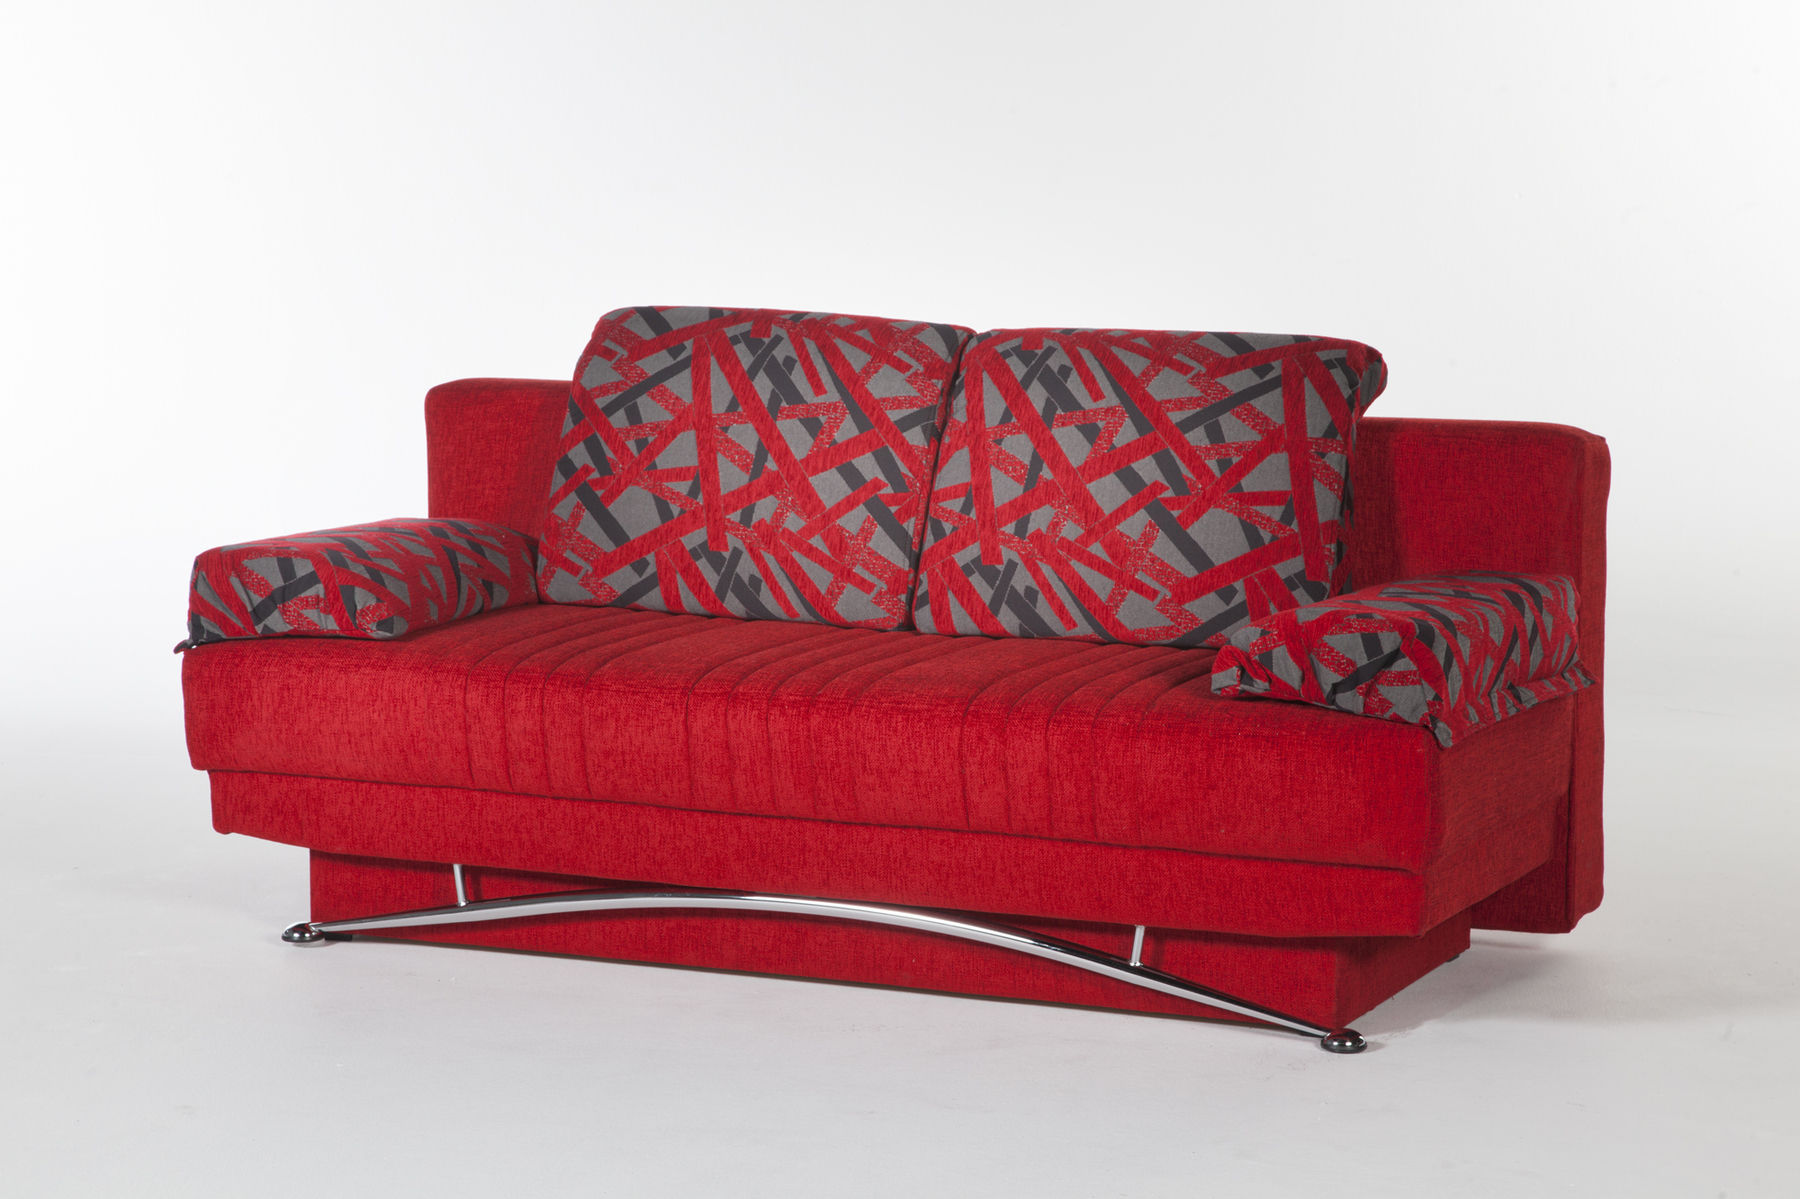 Istikbal Fantasy Red Sofa Bed